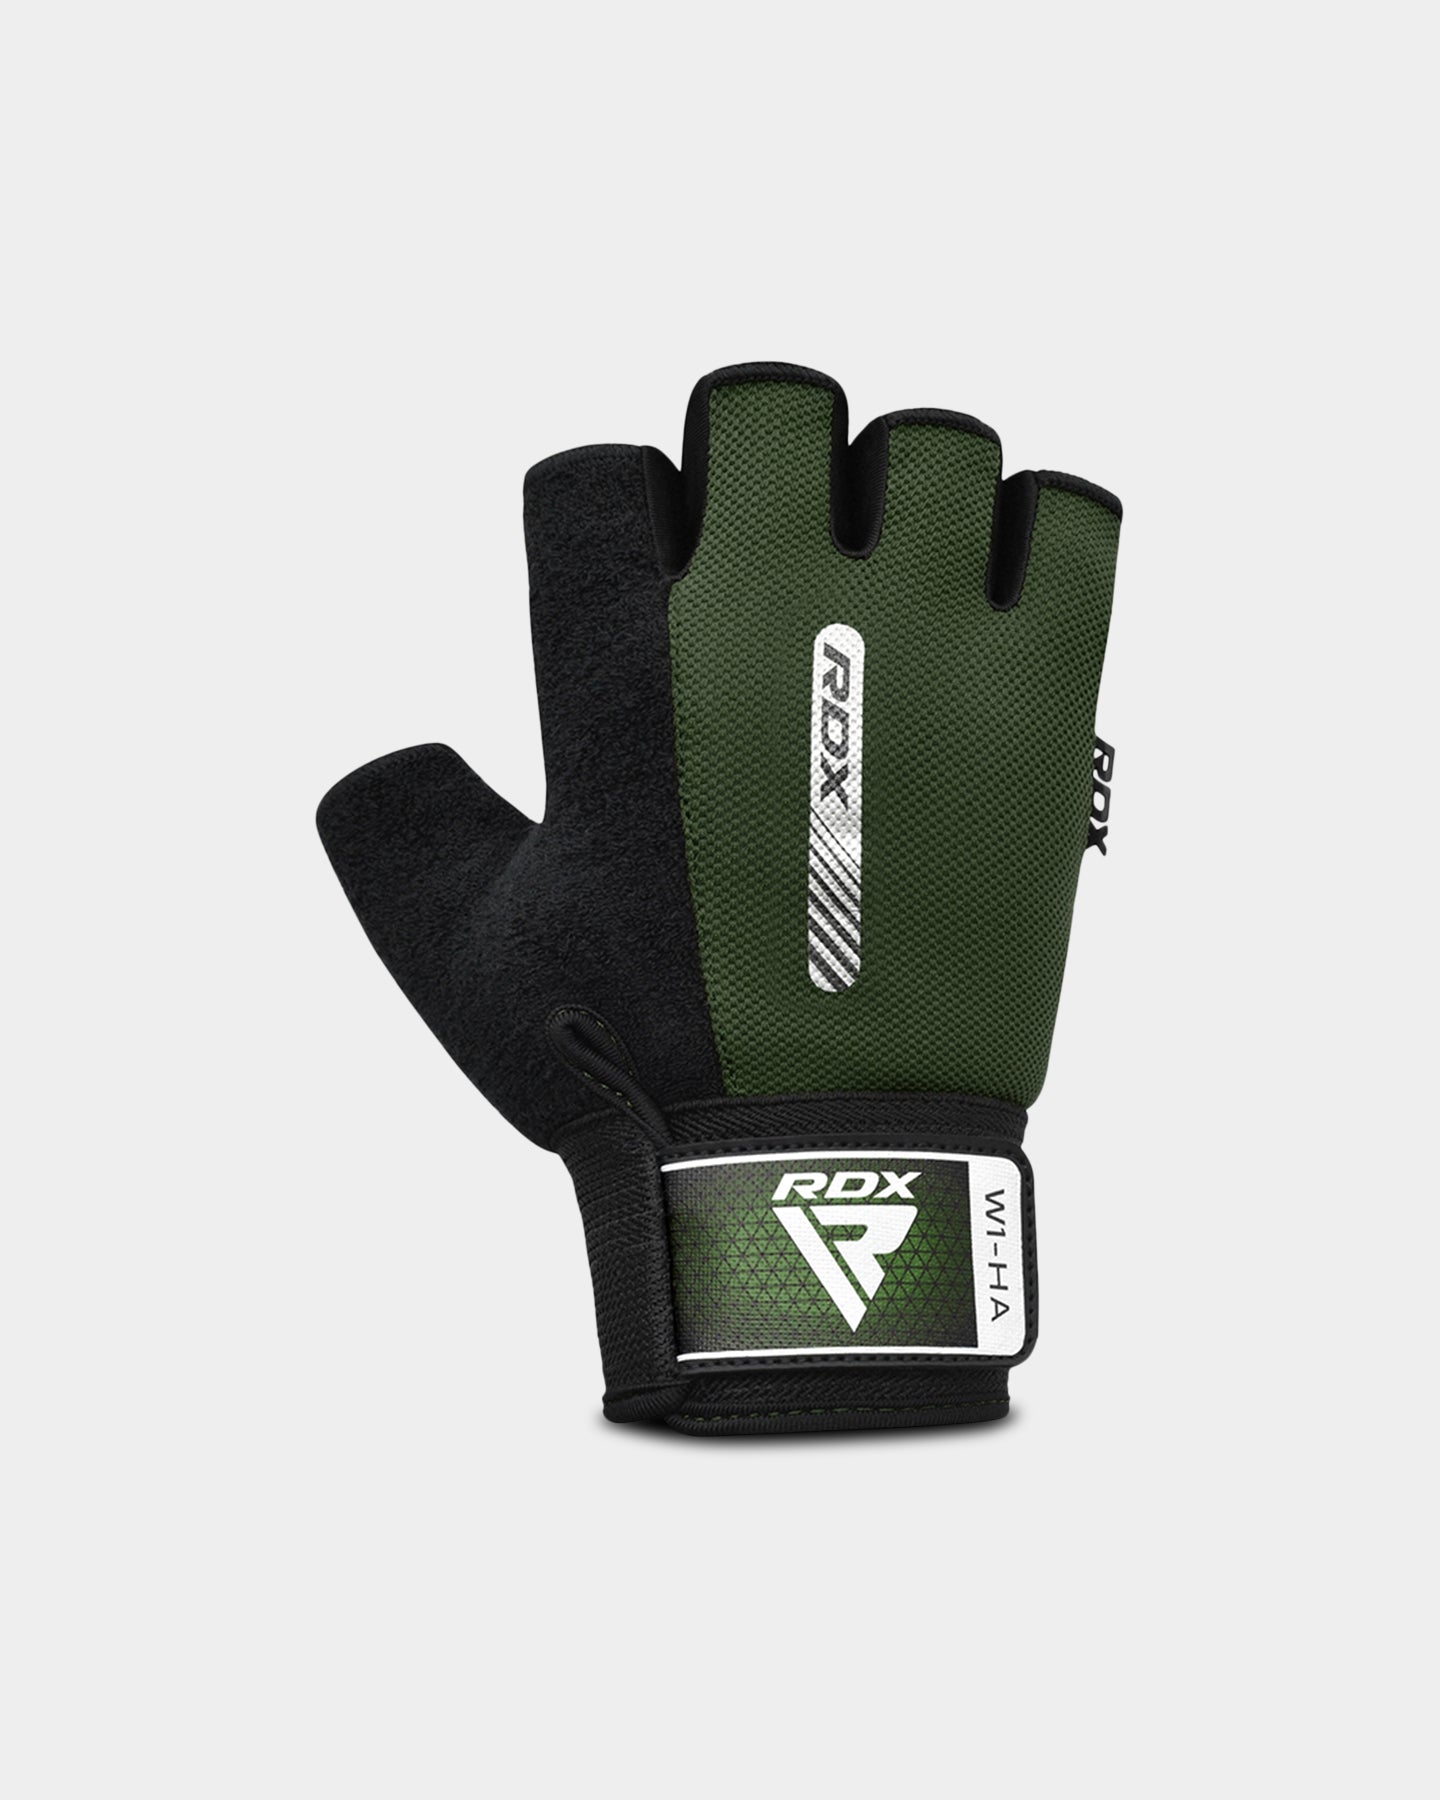 RDX Sports W1 Gym Workout Gloves, S, Army Green A2